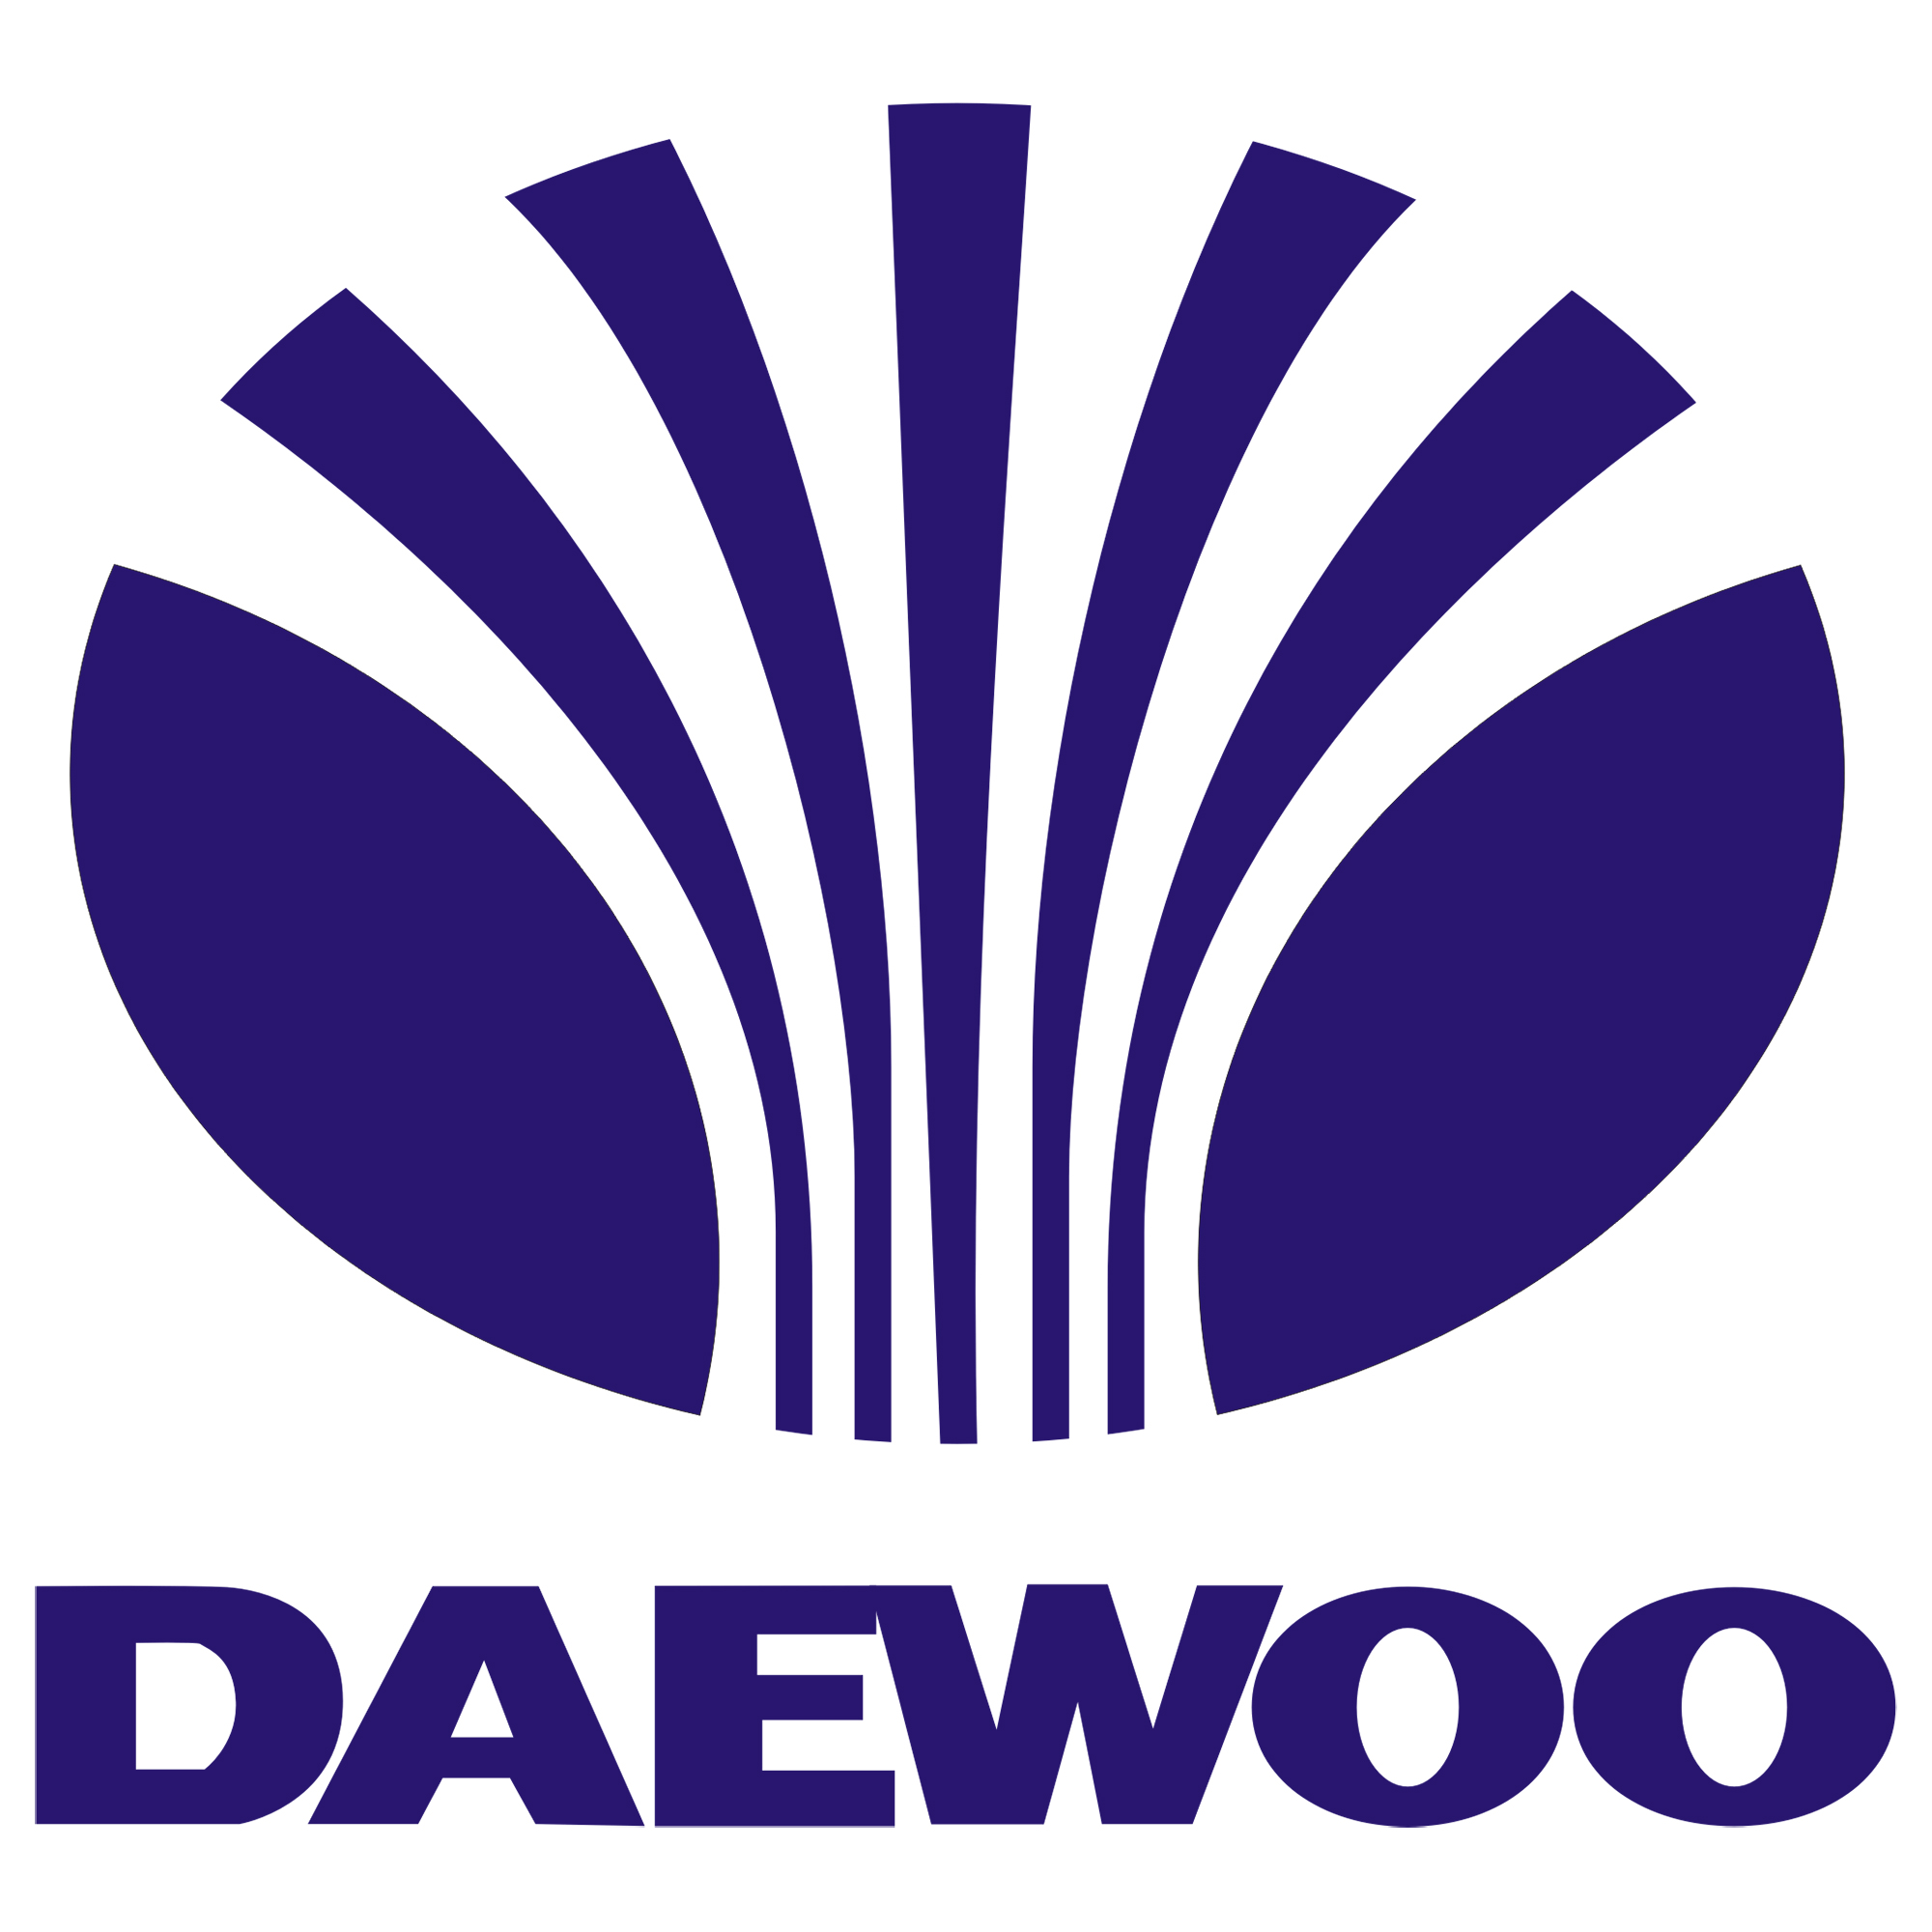 Daewoo 890237982 Freezer Evaporator Fan Motor Genuine Original Equipment Manufacturer (OEM) Part